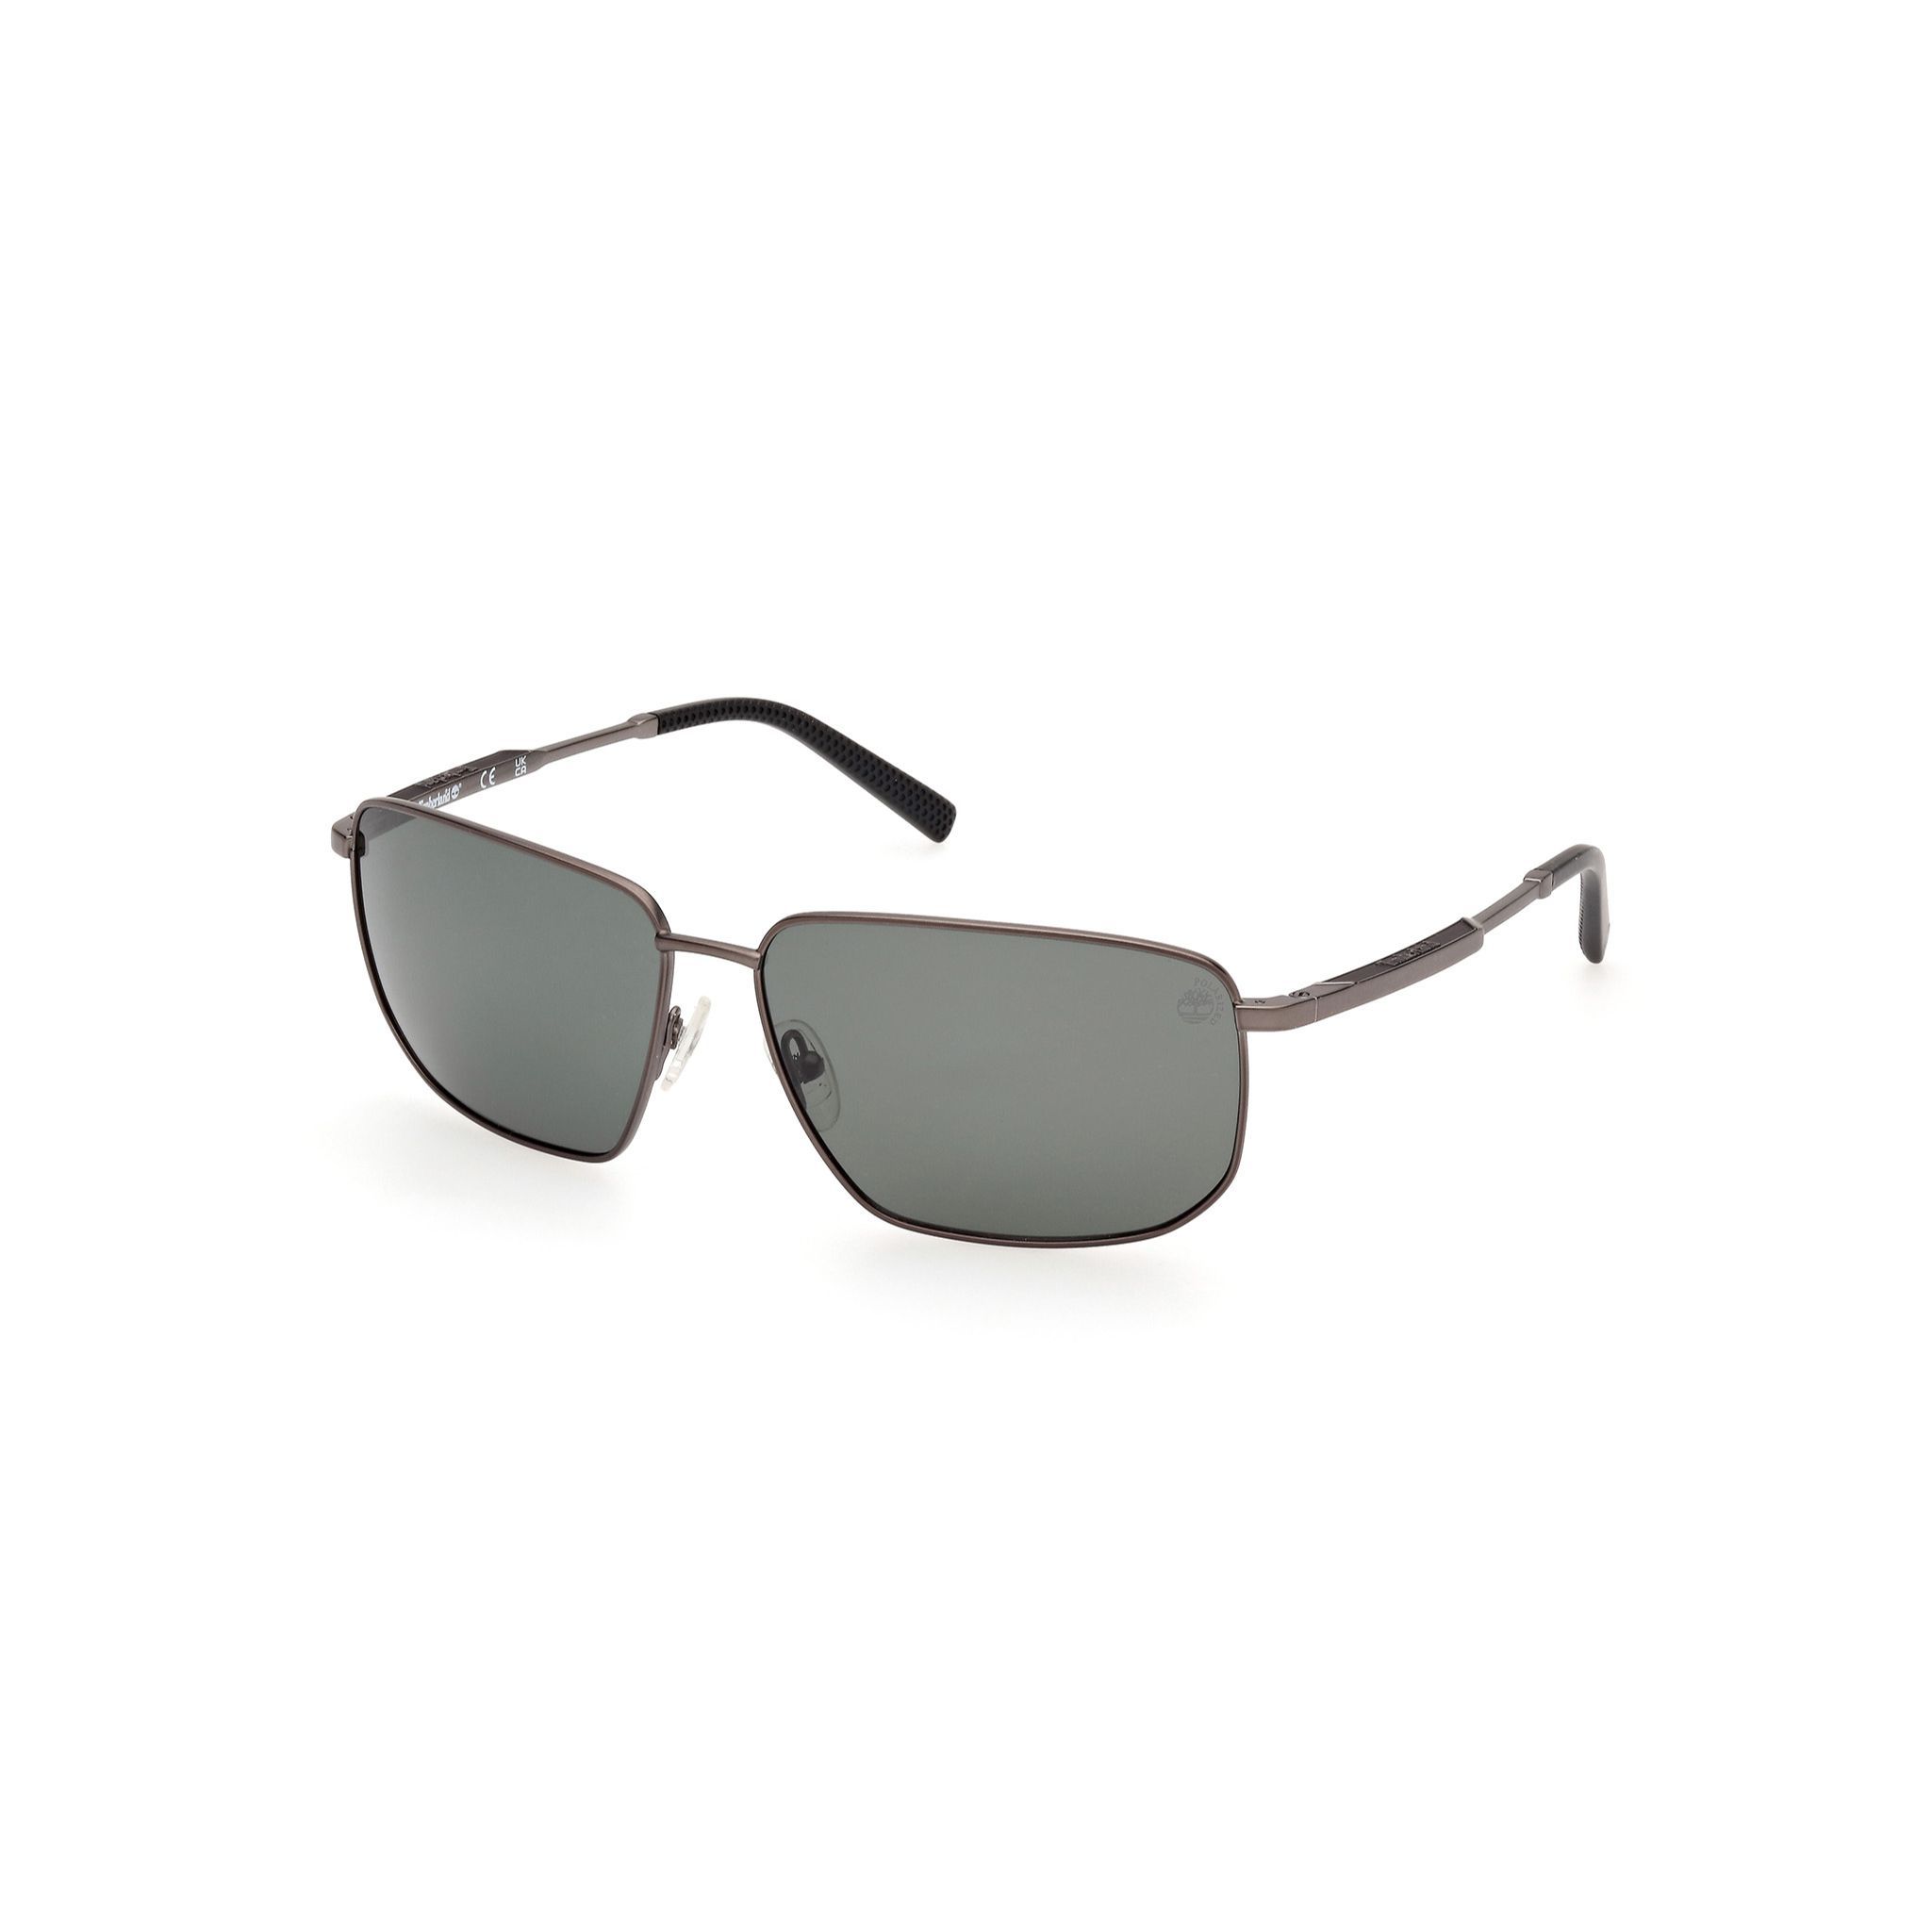 TB00010 Rectangle Sunglasses 07R - size 61